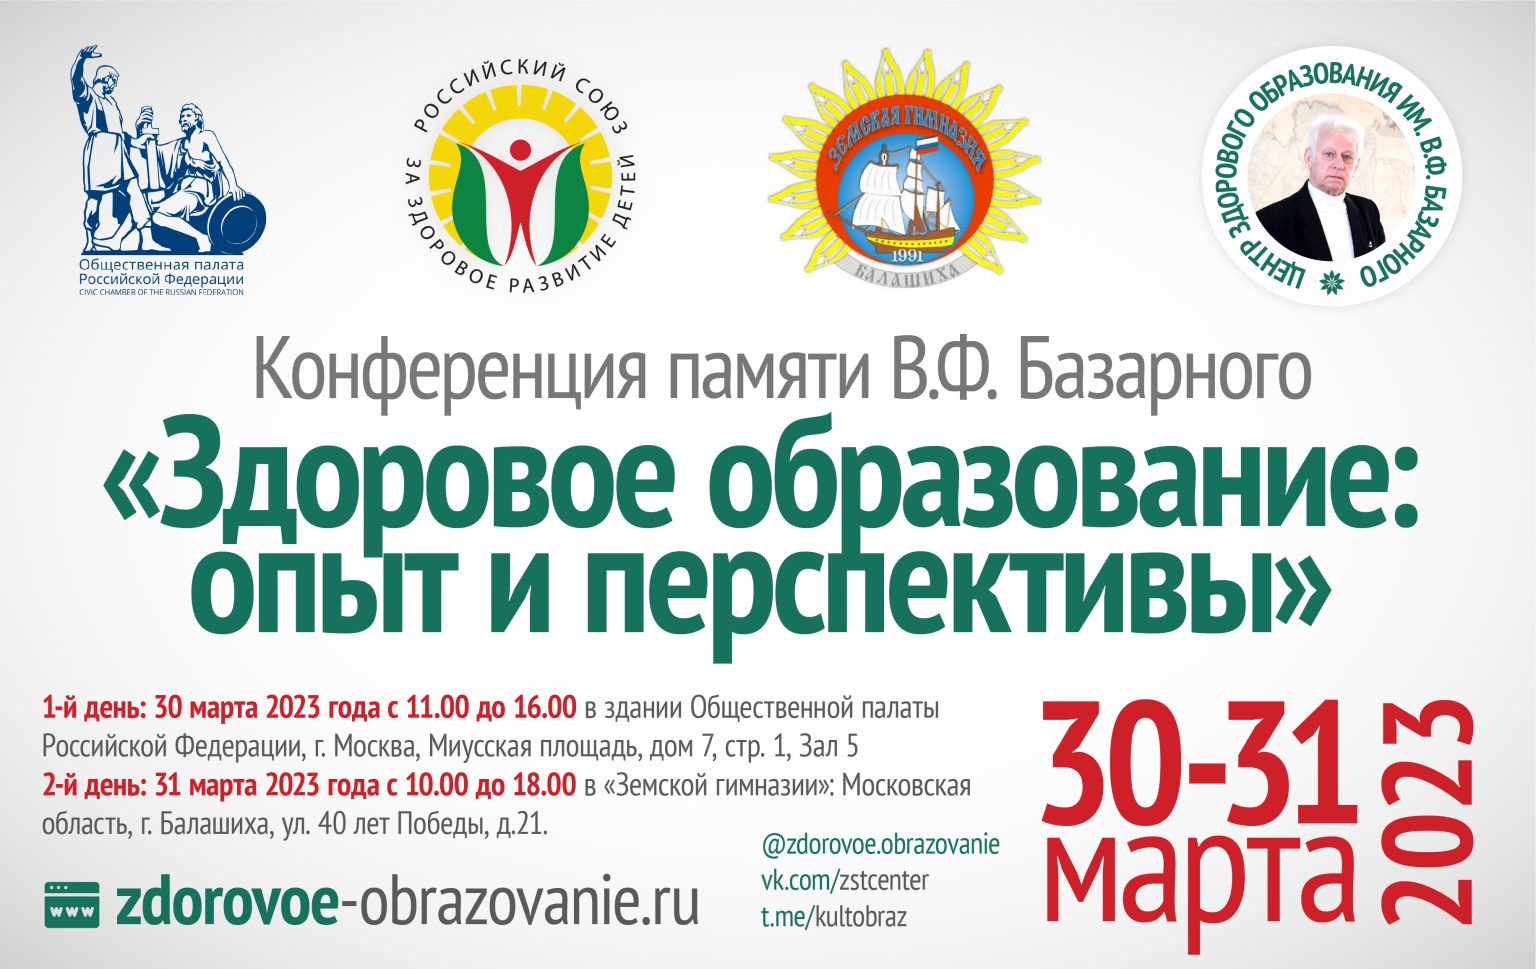 ZO-Conference-2023 Zagolovok-1536x969